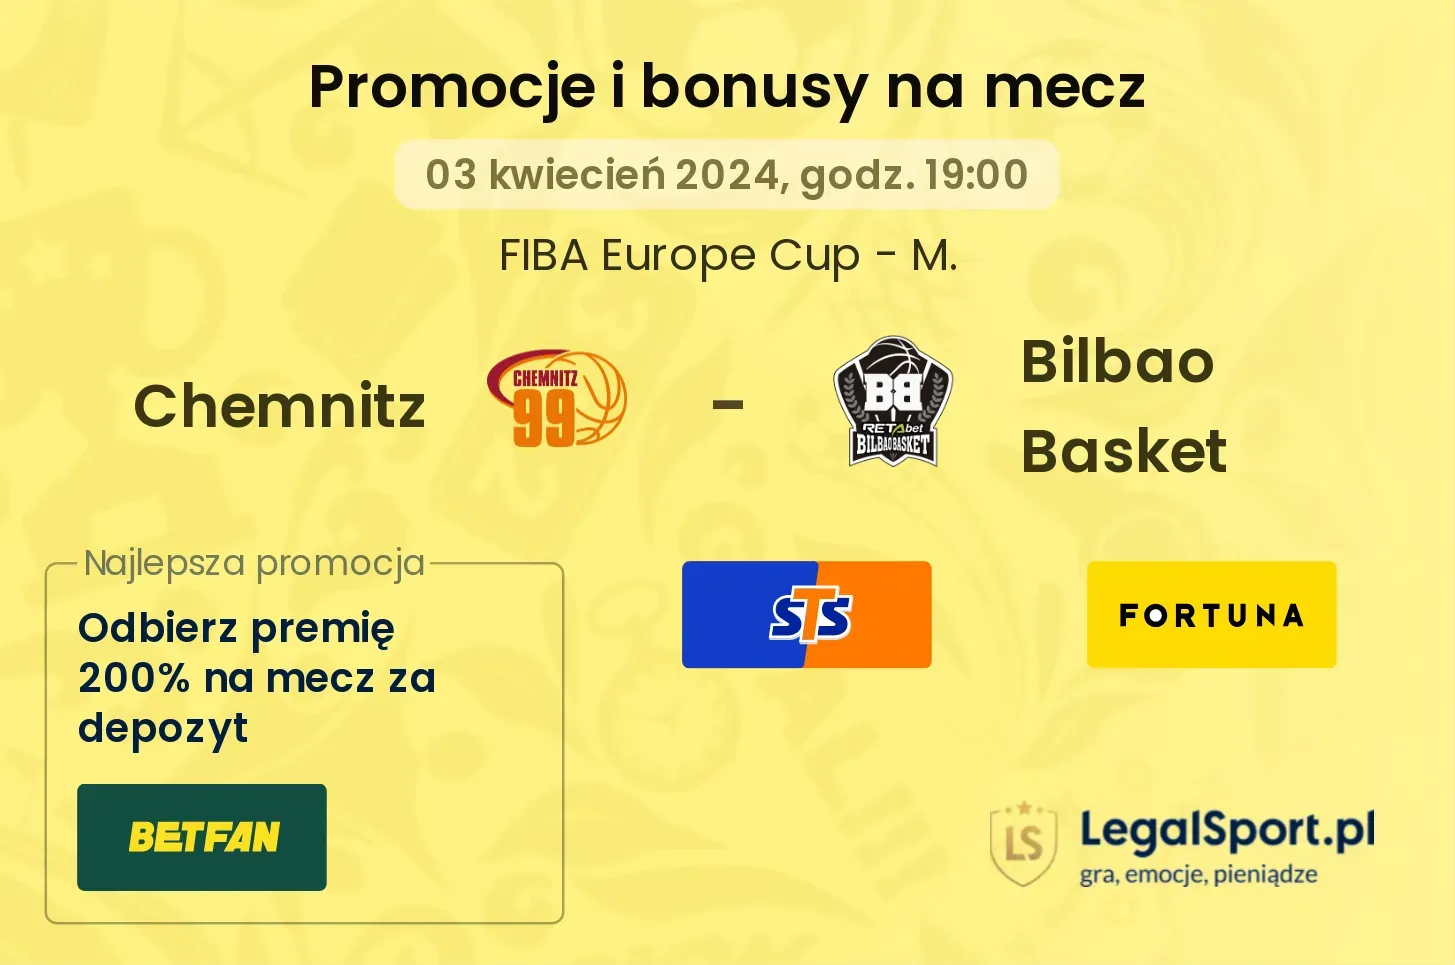 Chemnitz - Bilbao Basket promocje bonusy na mecz